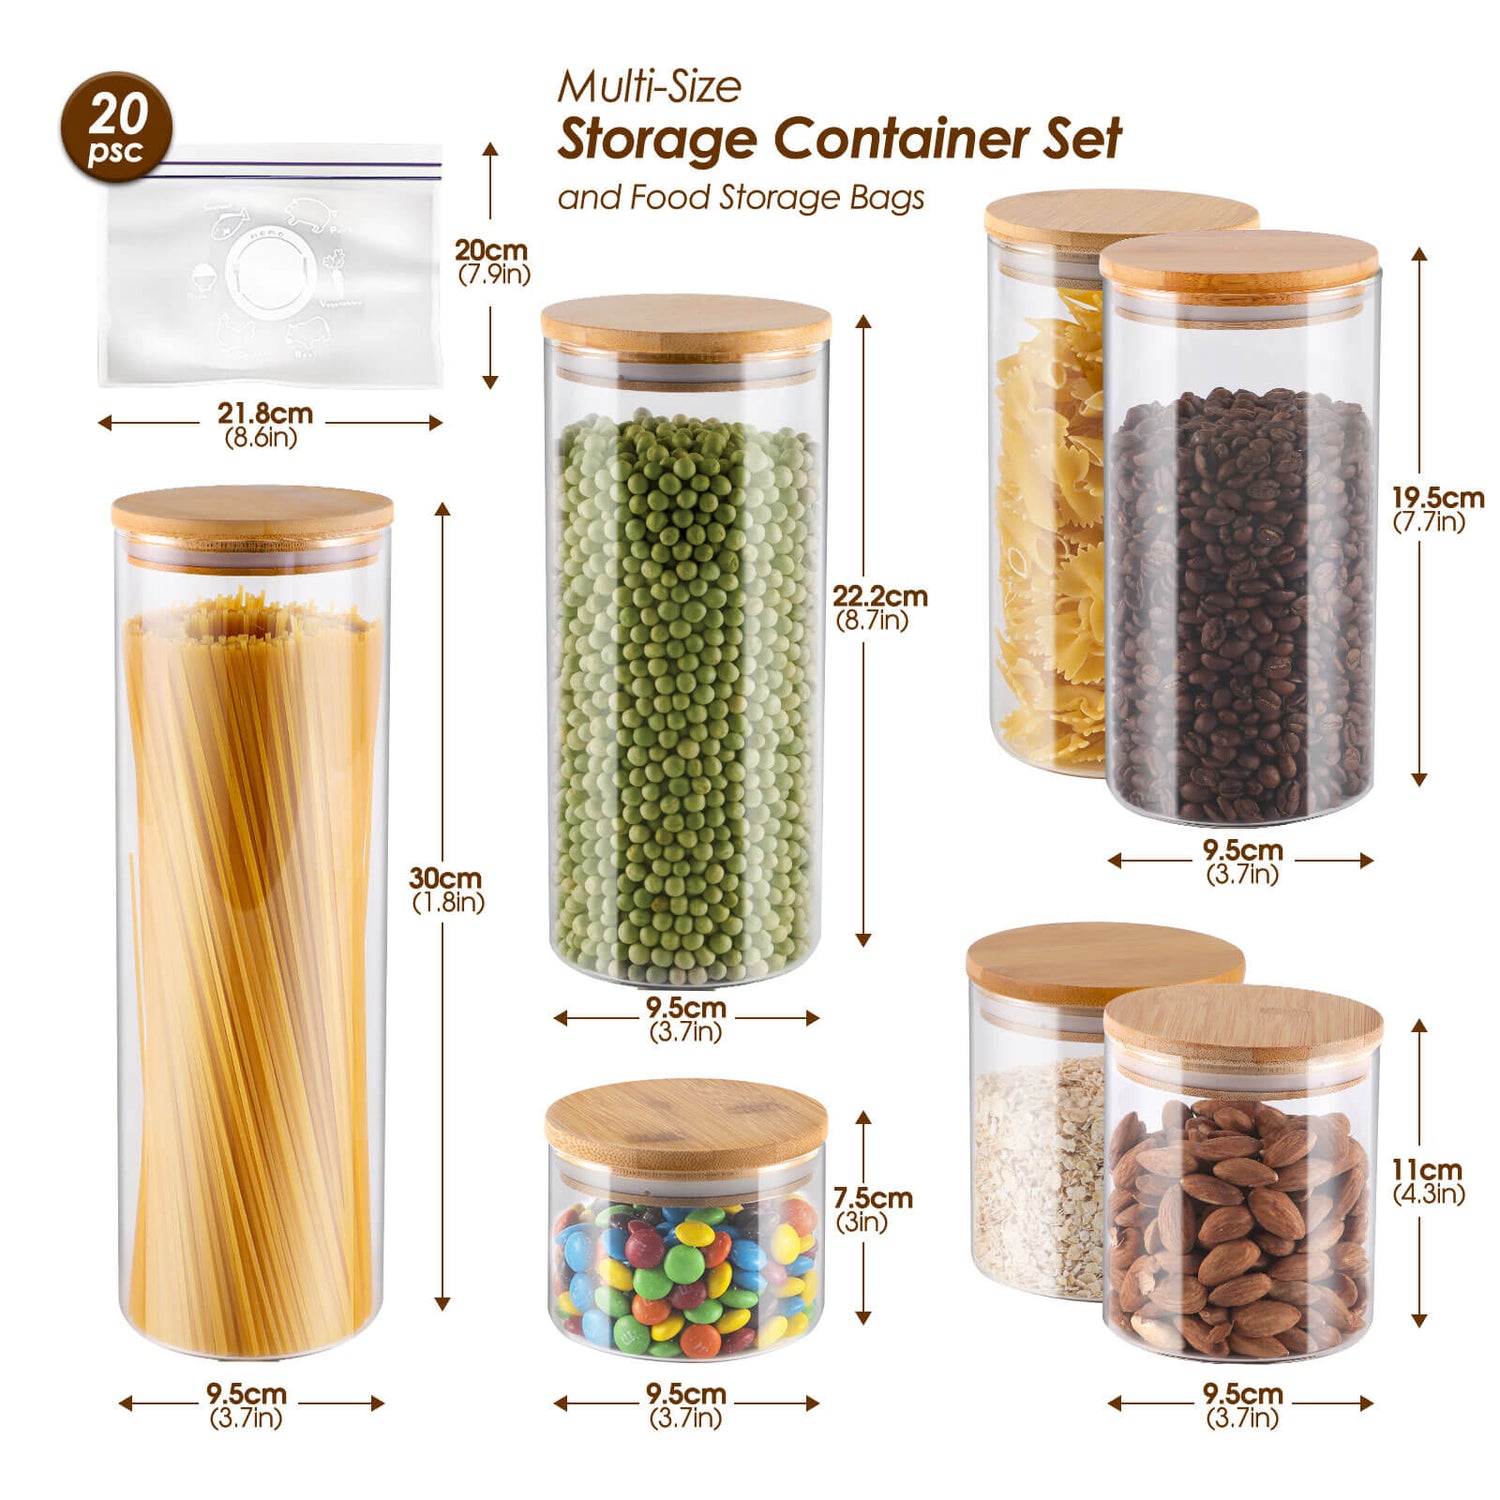 Masthome 1 Gallon Glass Storage Jars Set of 2,Airtight Cookie Jar